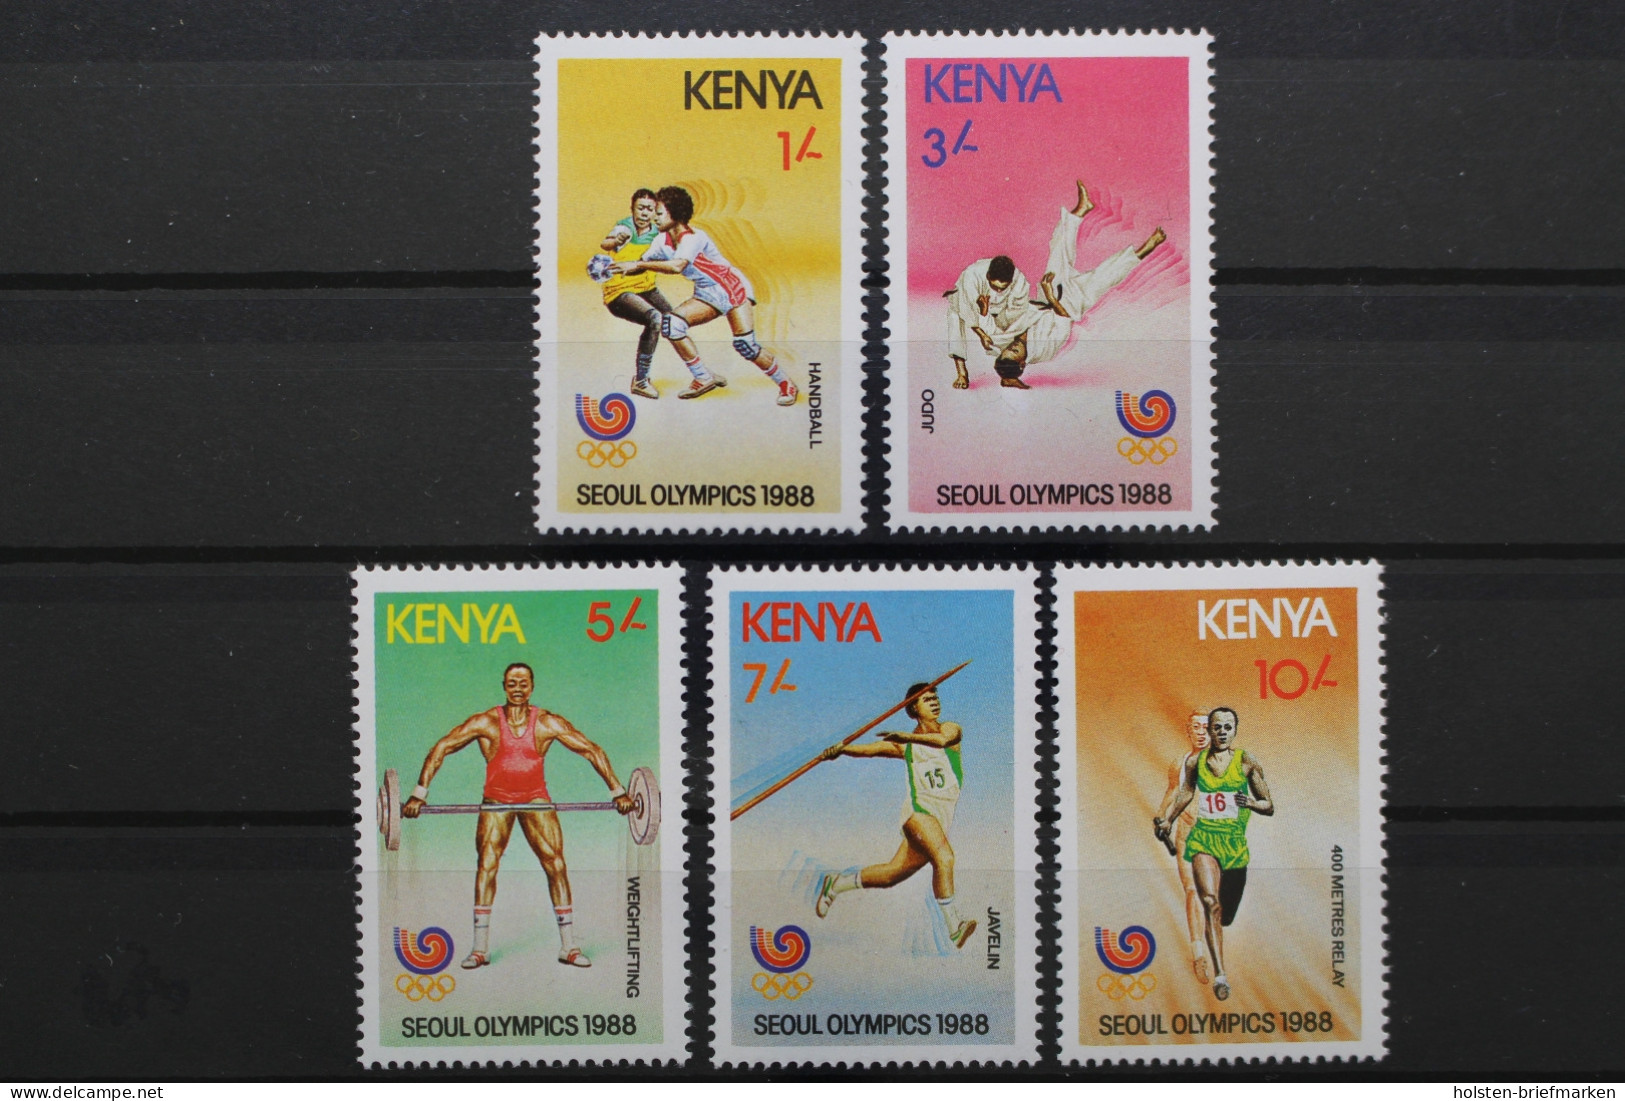 Kenia, MiNr. 447-451, Postfrisch - Kenya (1963-...)